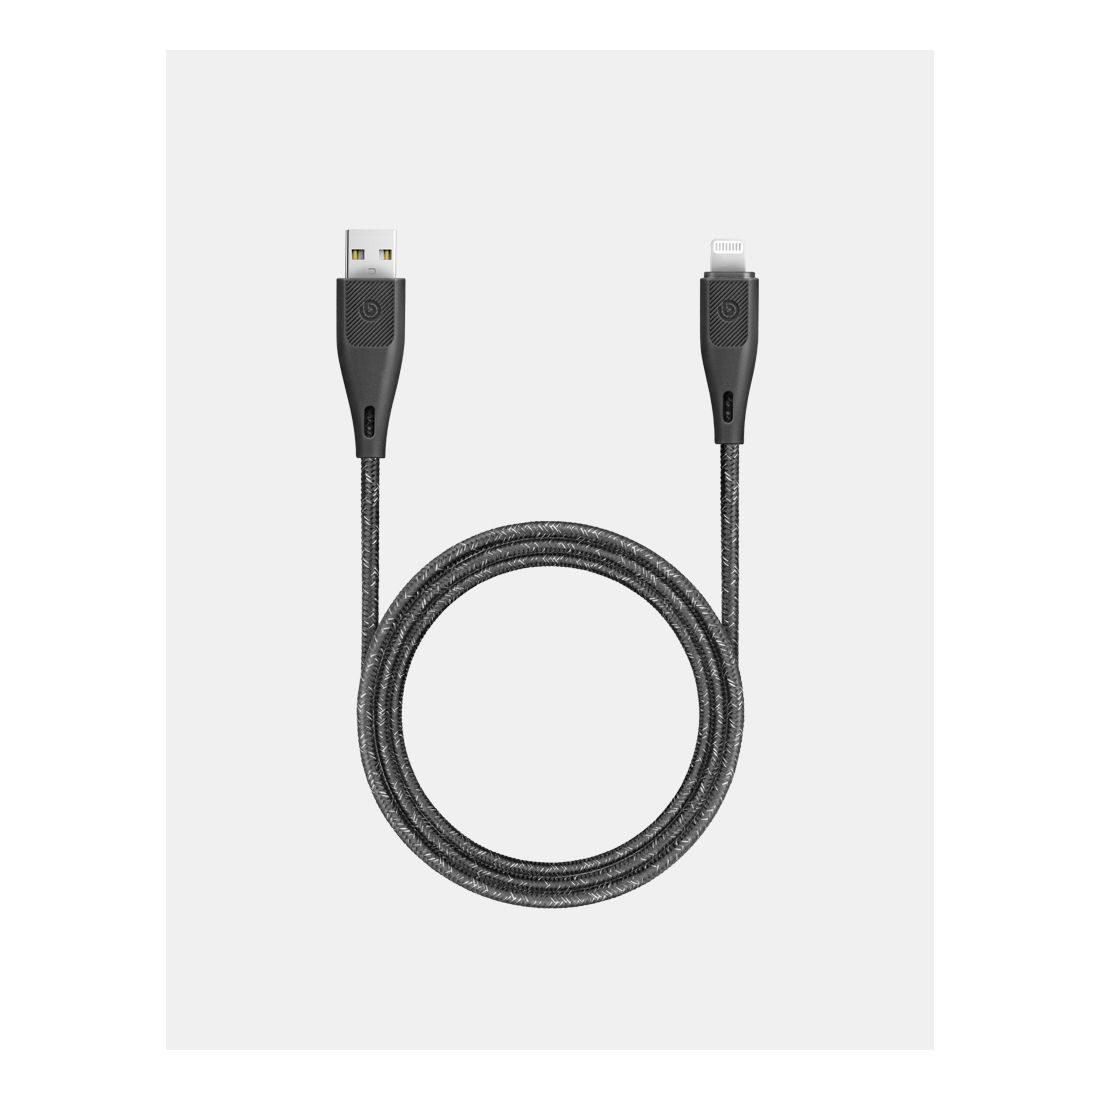 Bazic Gocharge USB-A to Lightning C89 MFi Braided Cable 1.2m - Black